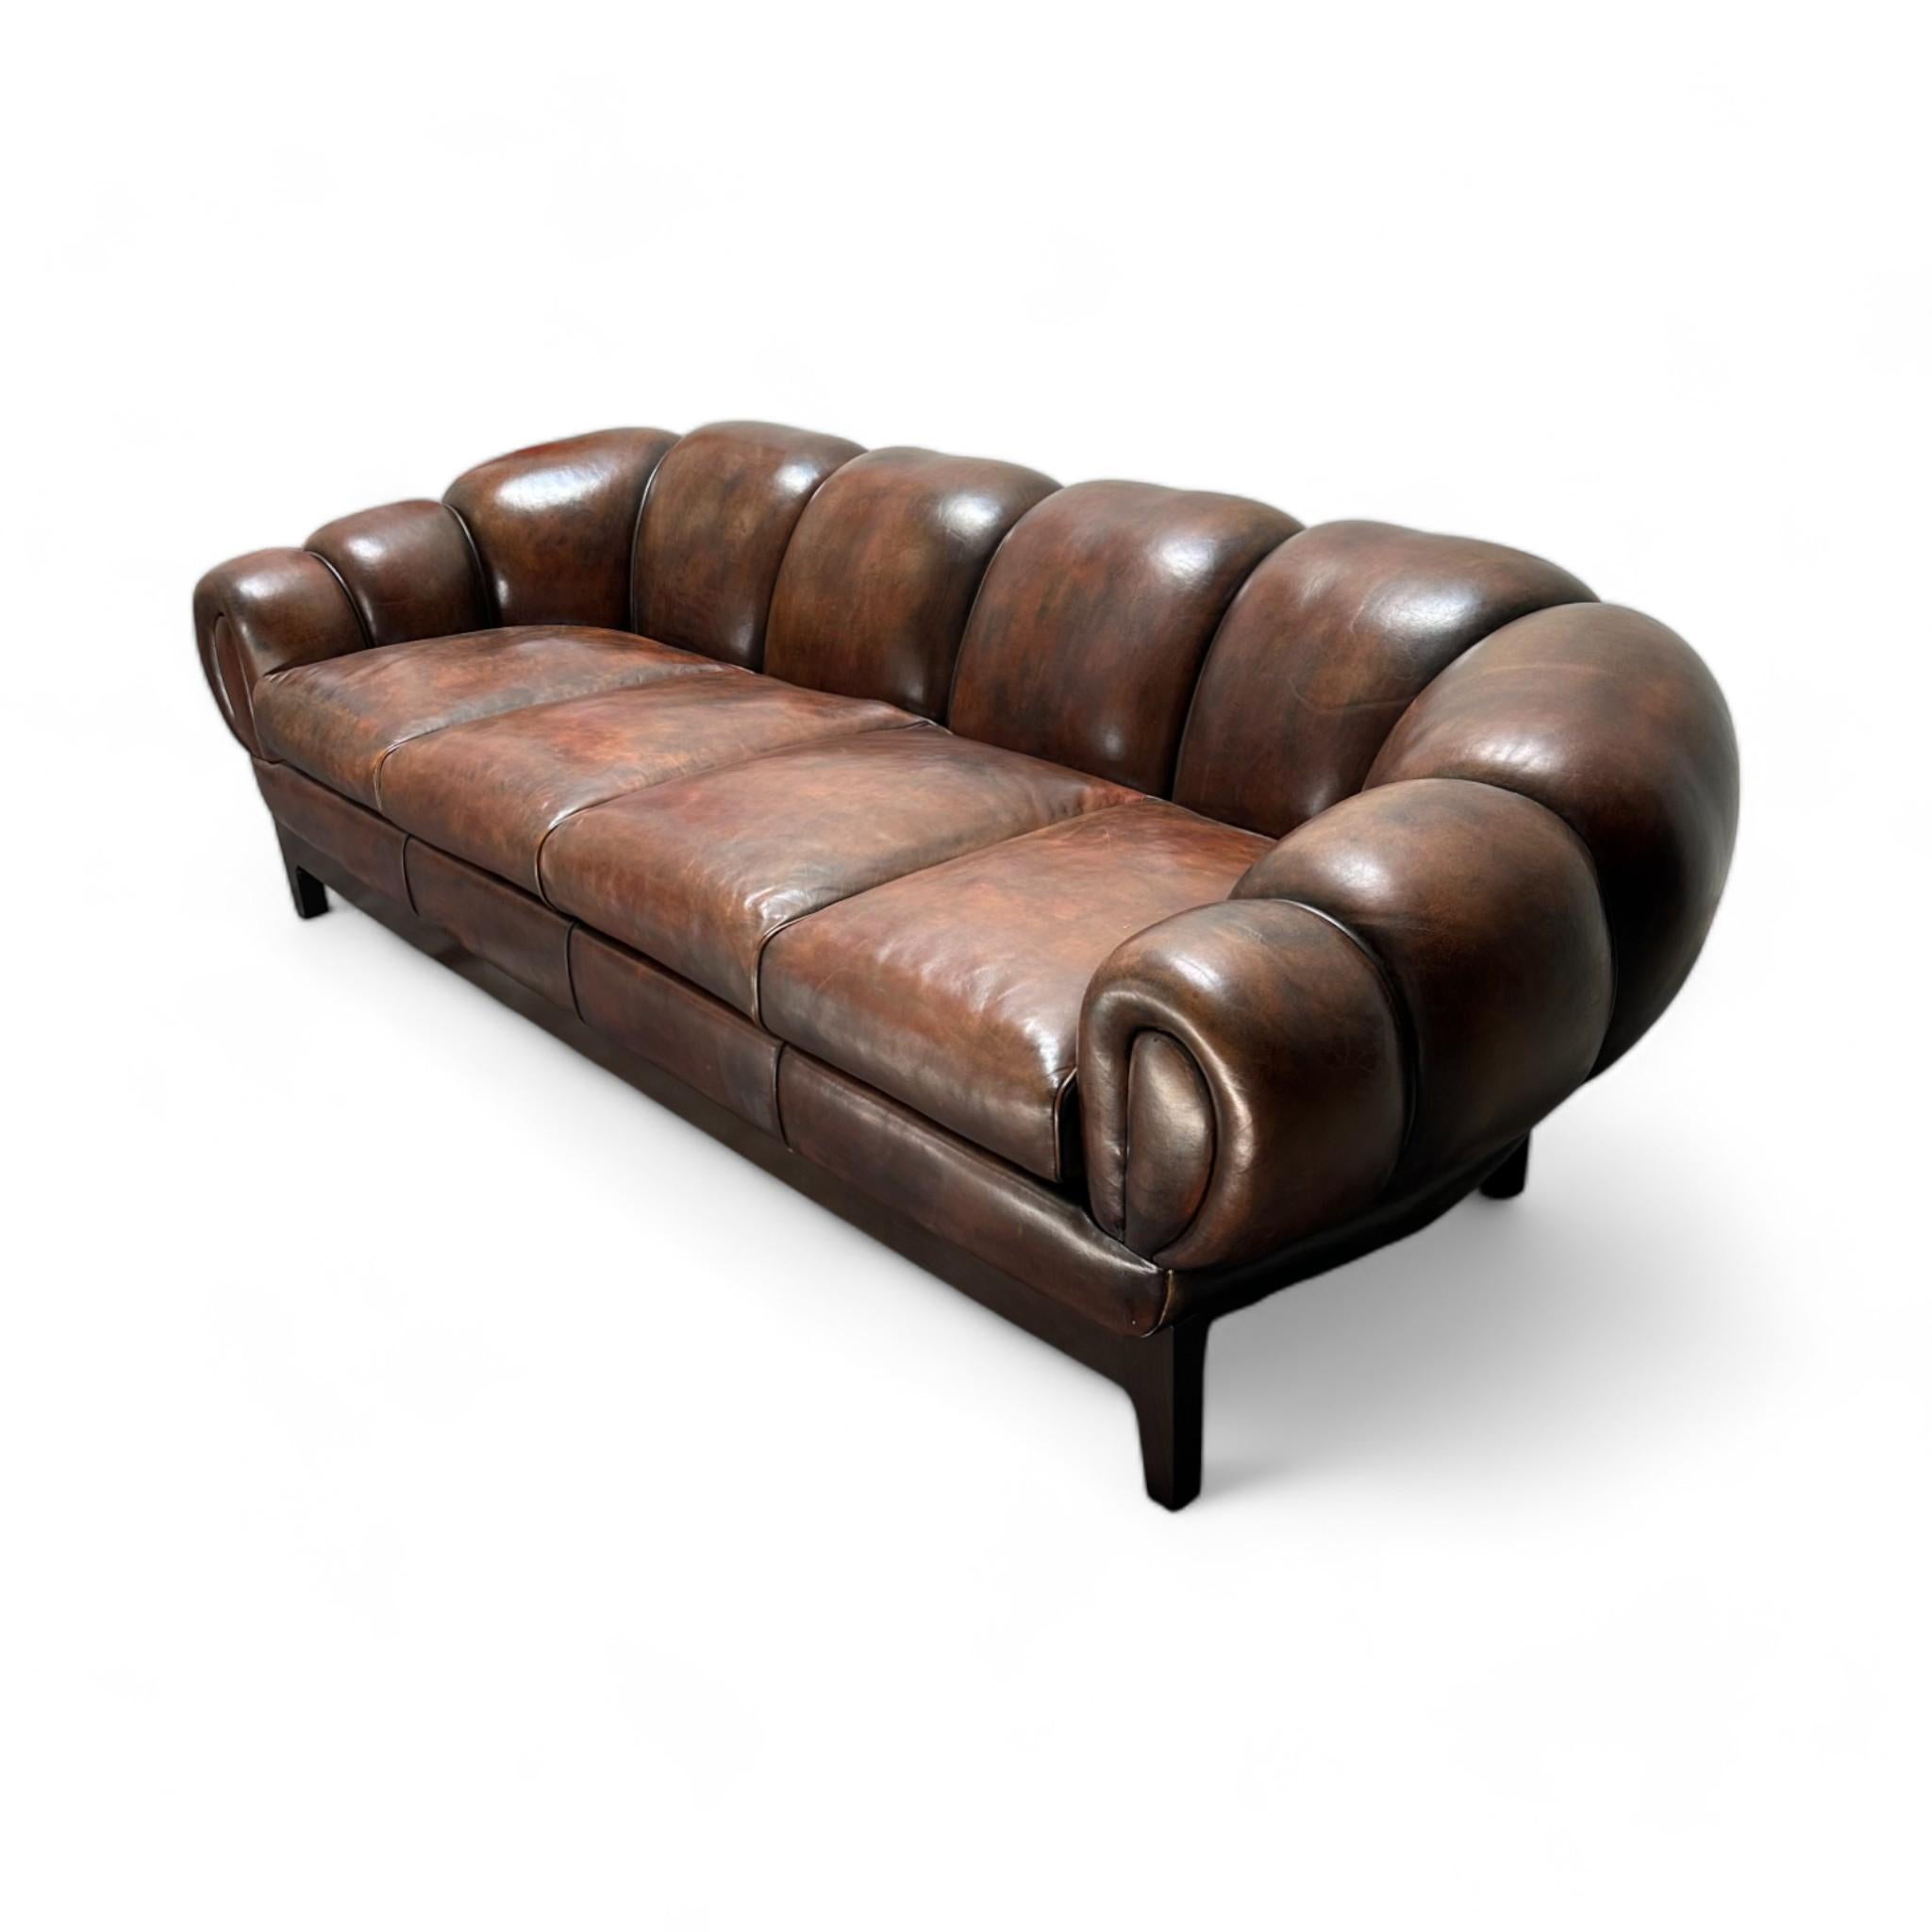 Art Deco Jean De Merry Sāo Leather Sofa For Sale